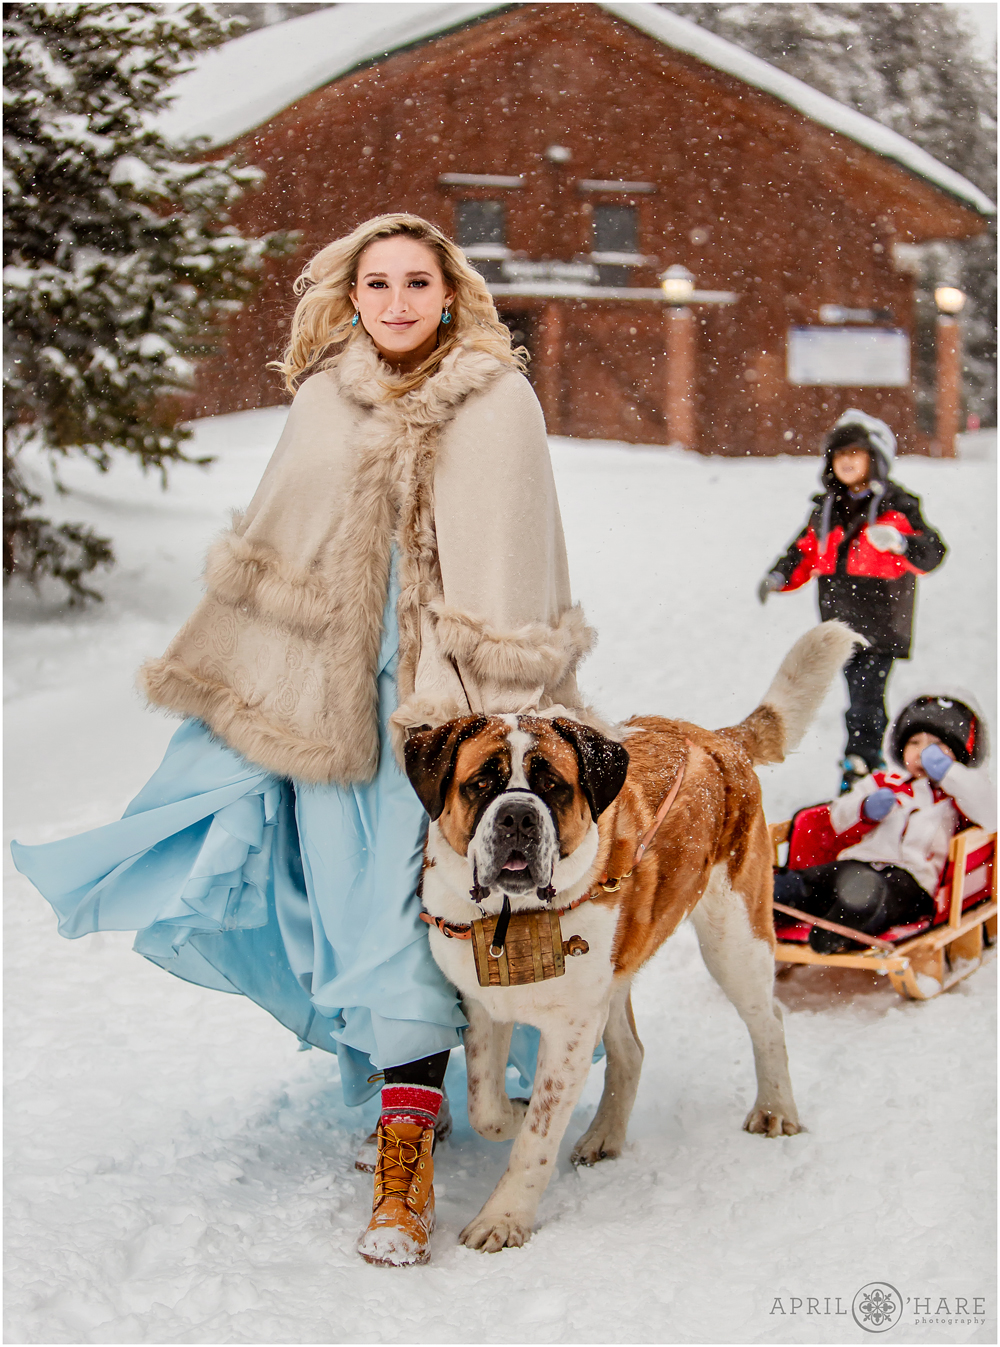 Magical outdoor destination winter wedding on a Colorado mountain with St. Bernard pulling a sleigh 